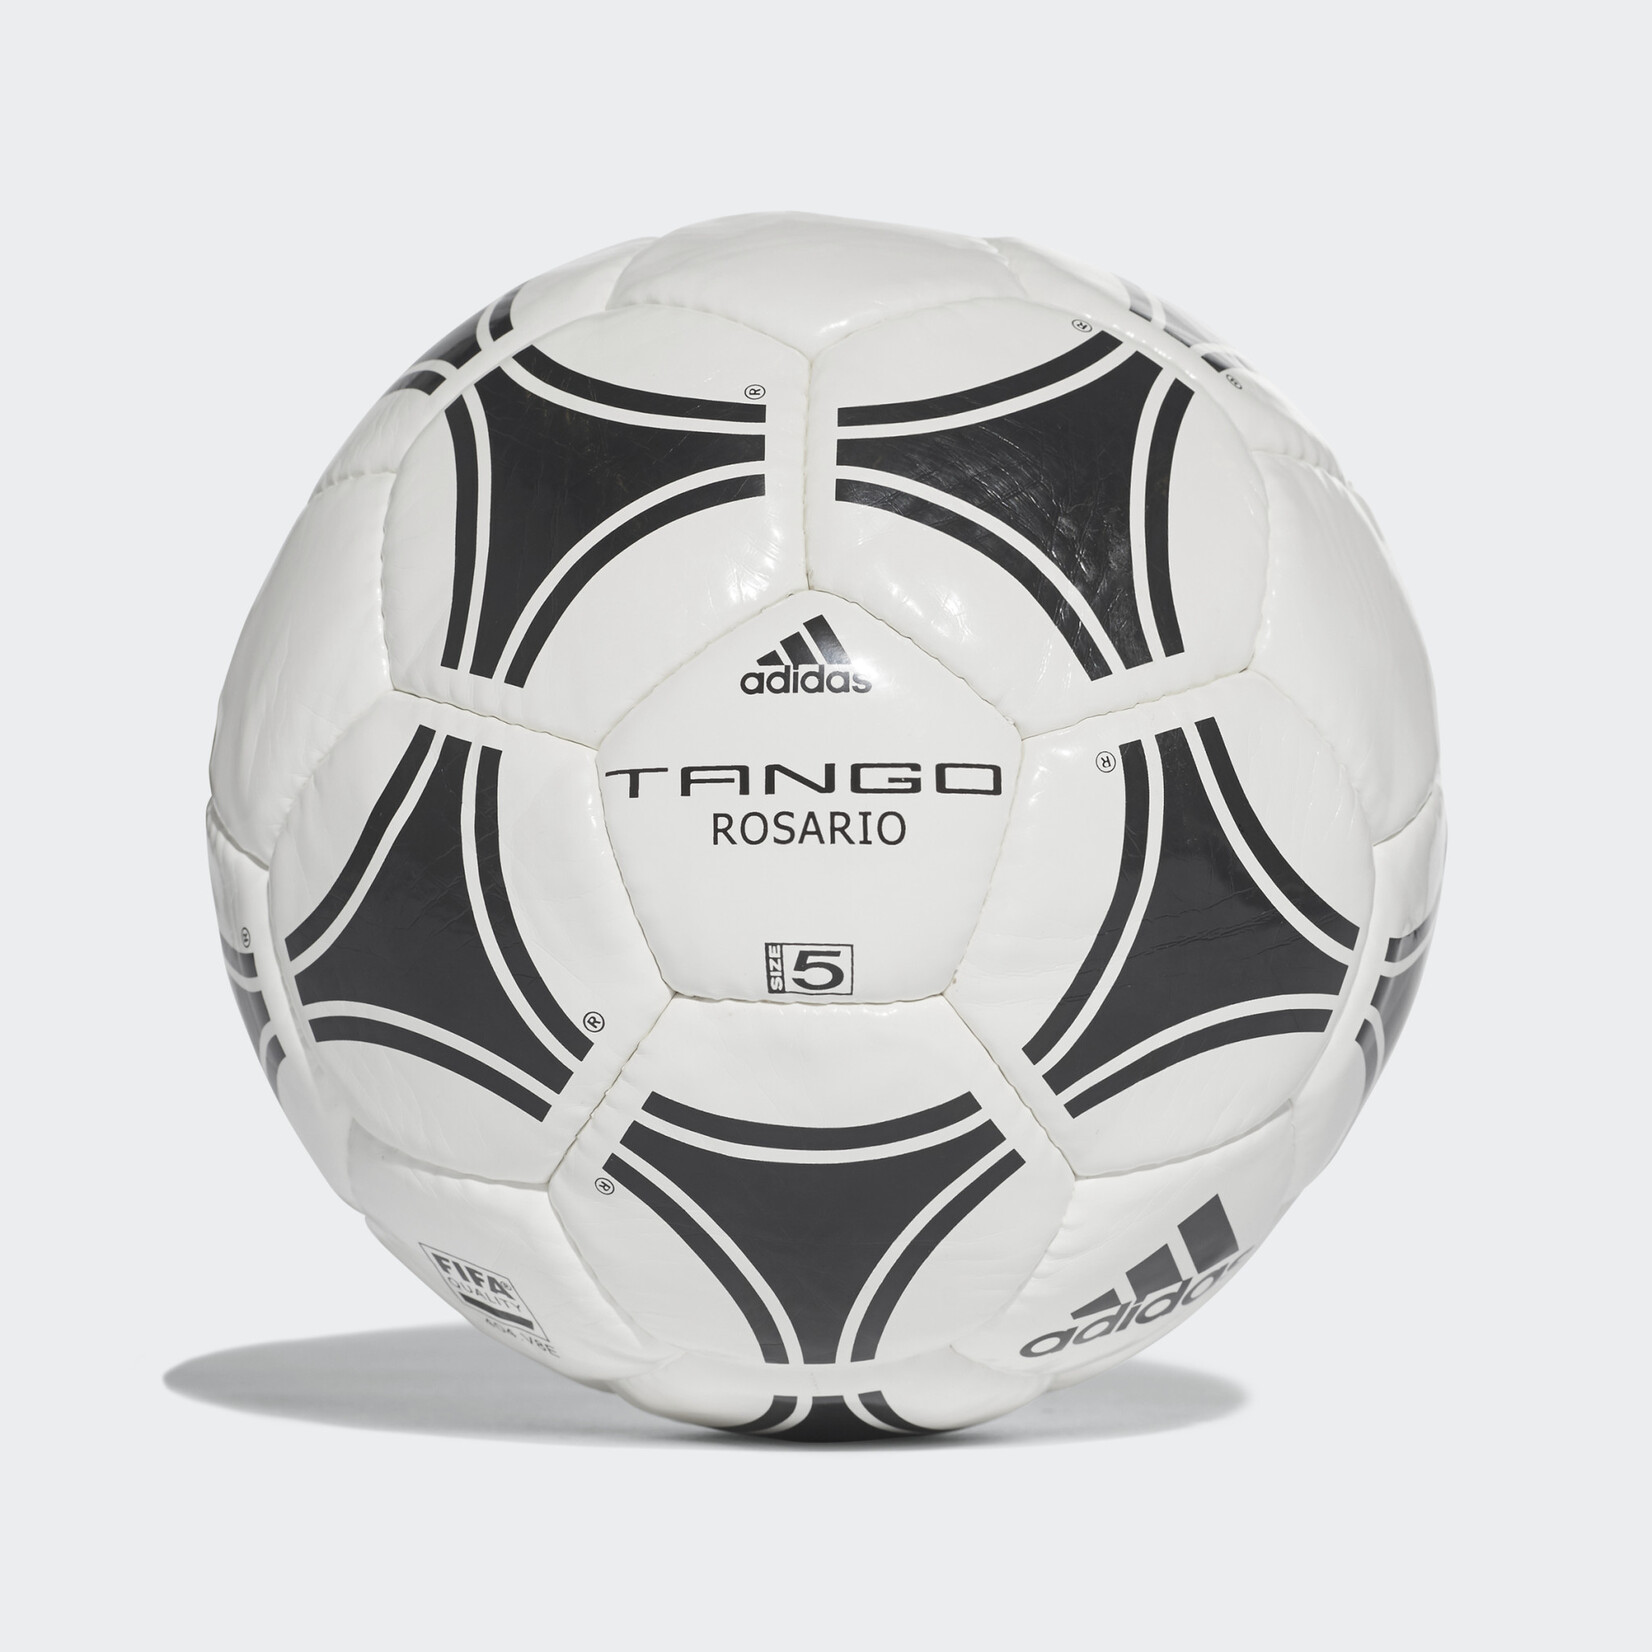 Adidas Tango Rosario Fifa Quality Ball